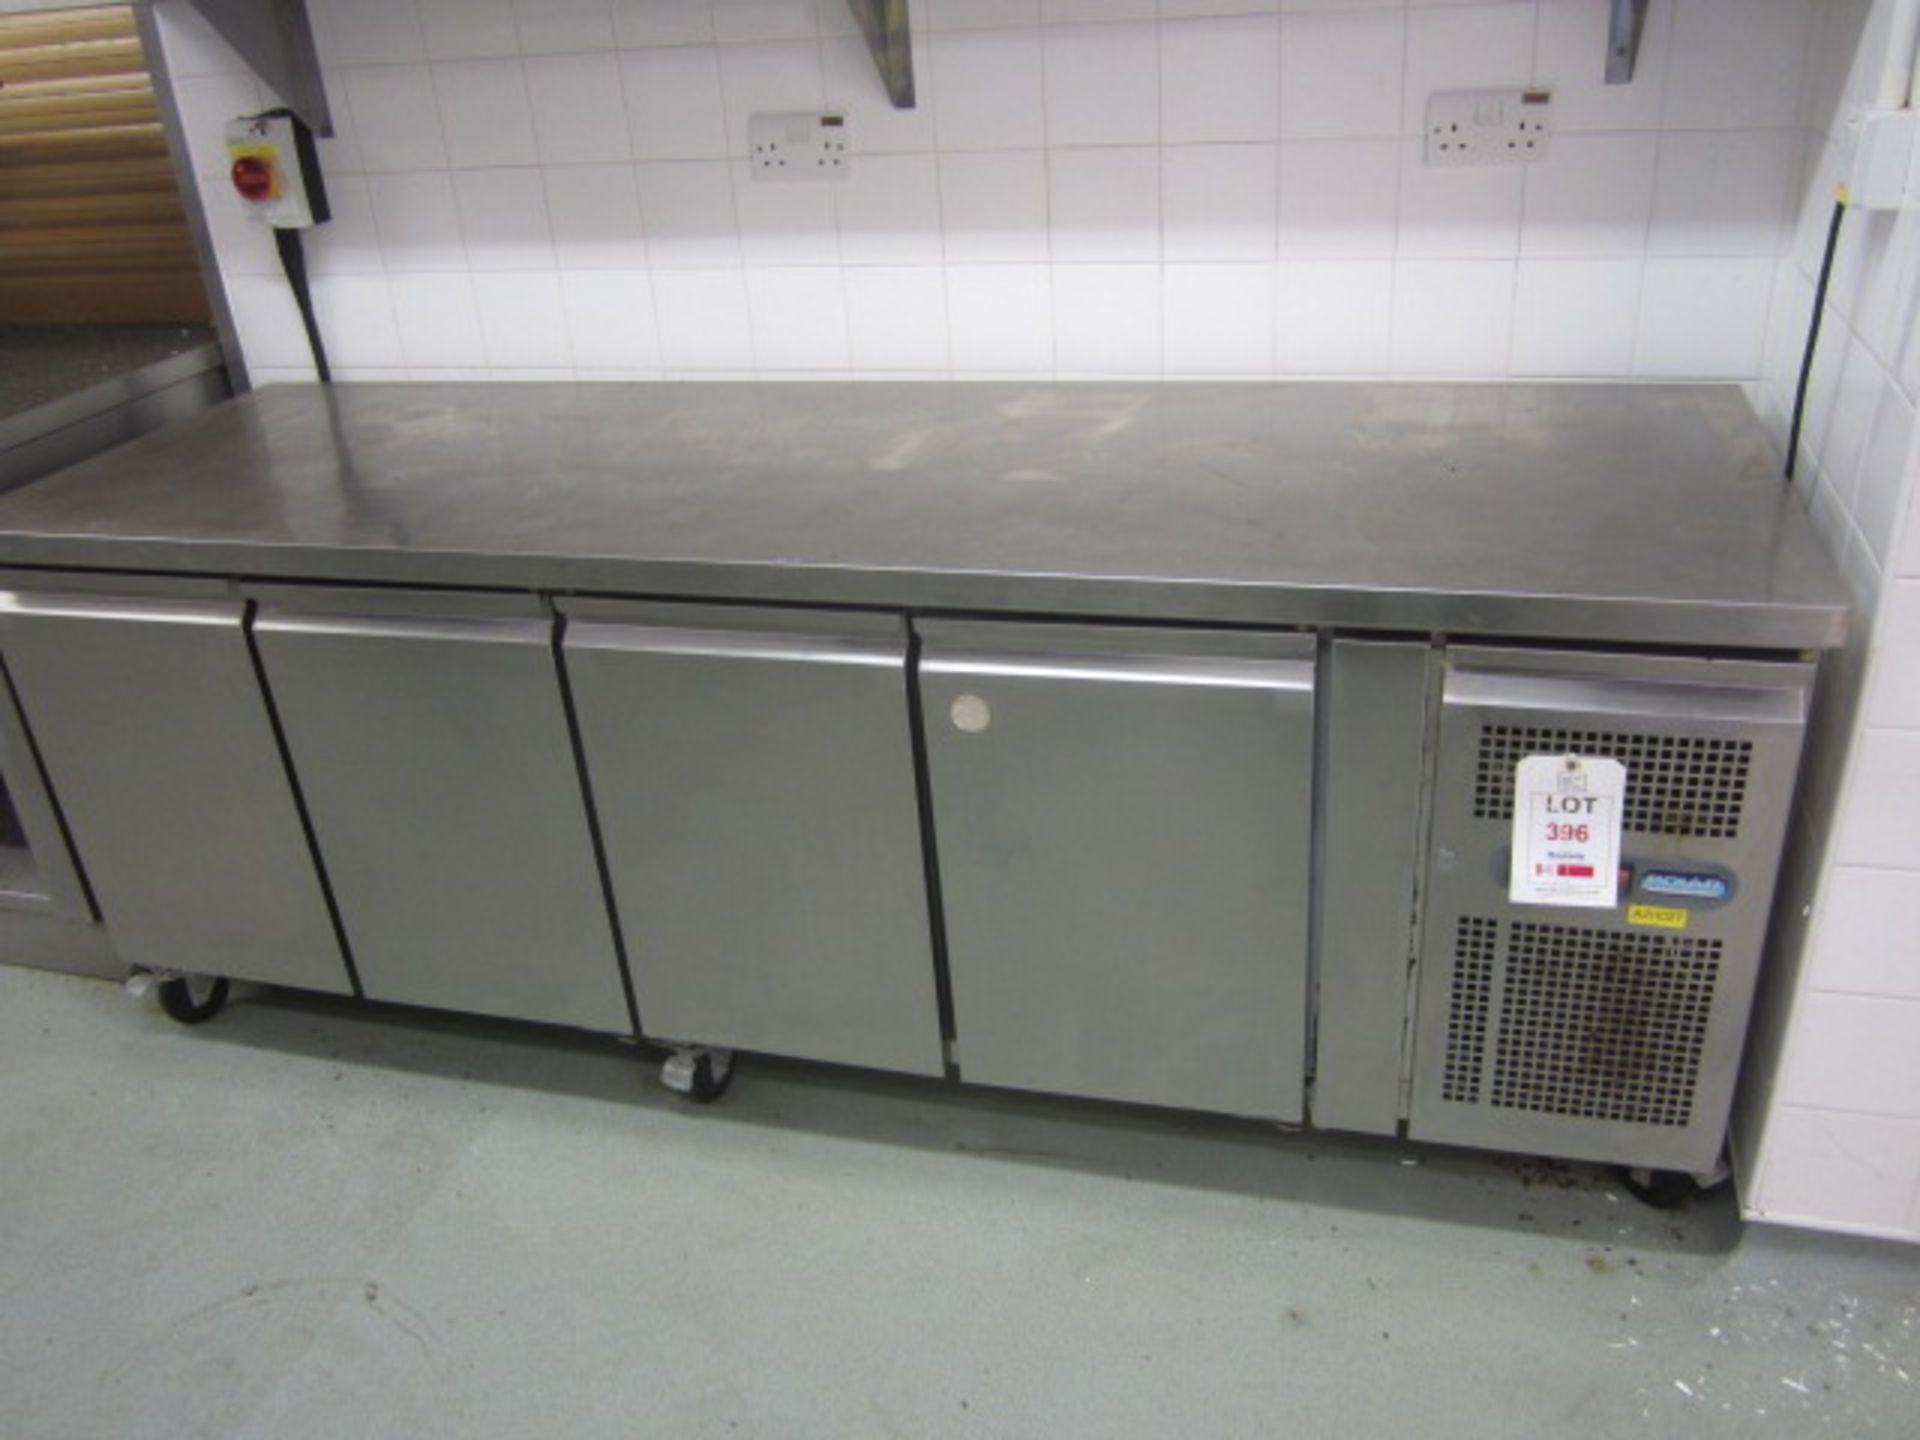 Polar stainless steel 4 door refrigerator with preparation worktop, 2230mm x 700mm x H850mm